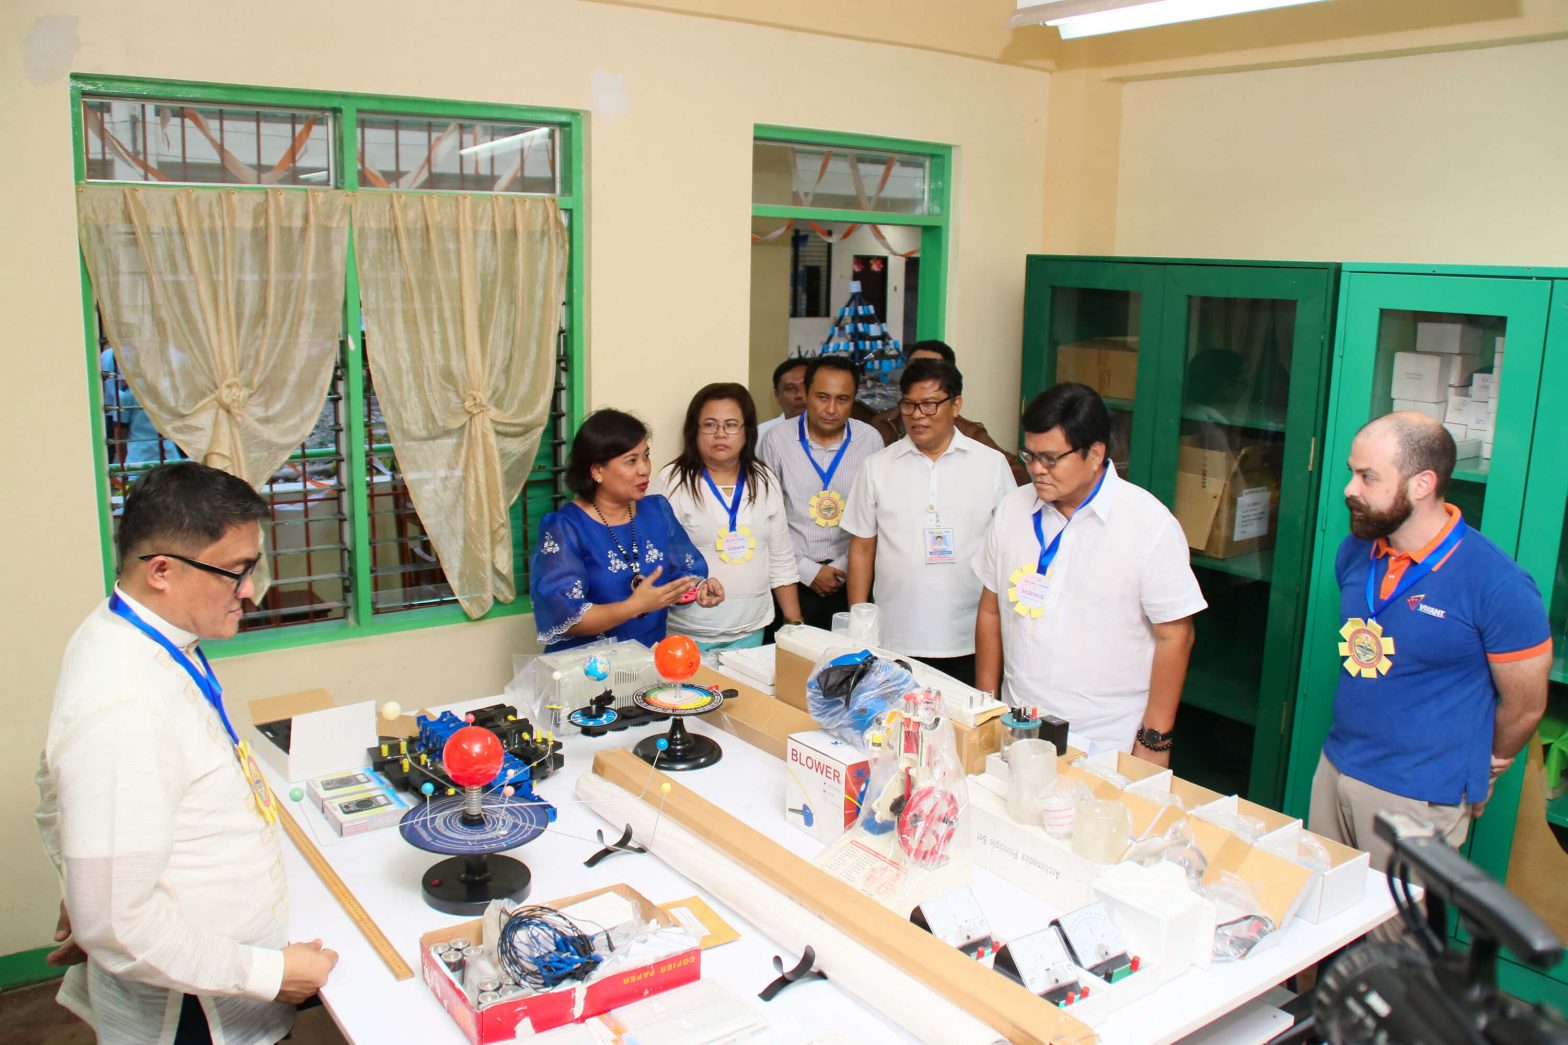 Vivant Foundation gives science lab equipment to 3 Cebu schools